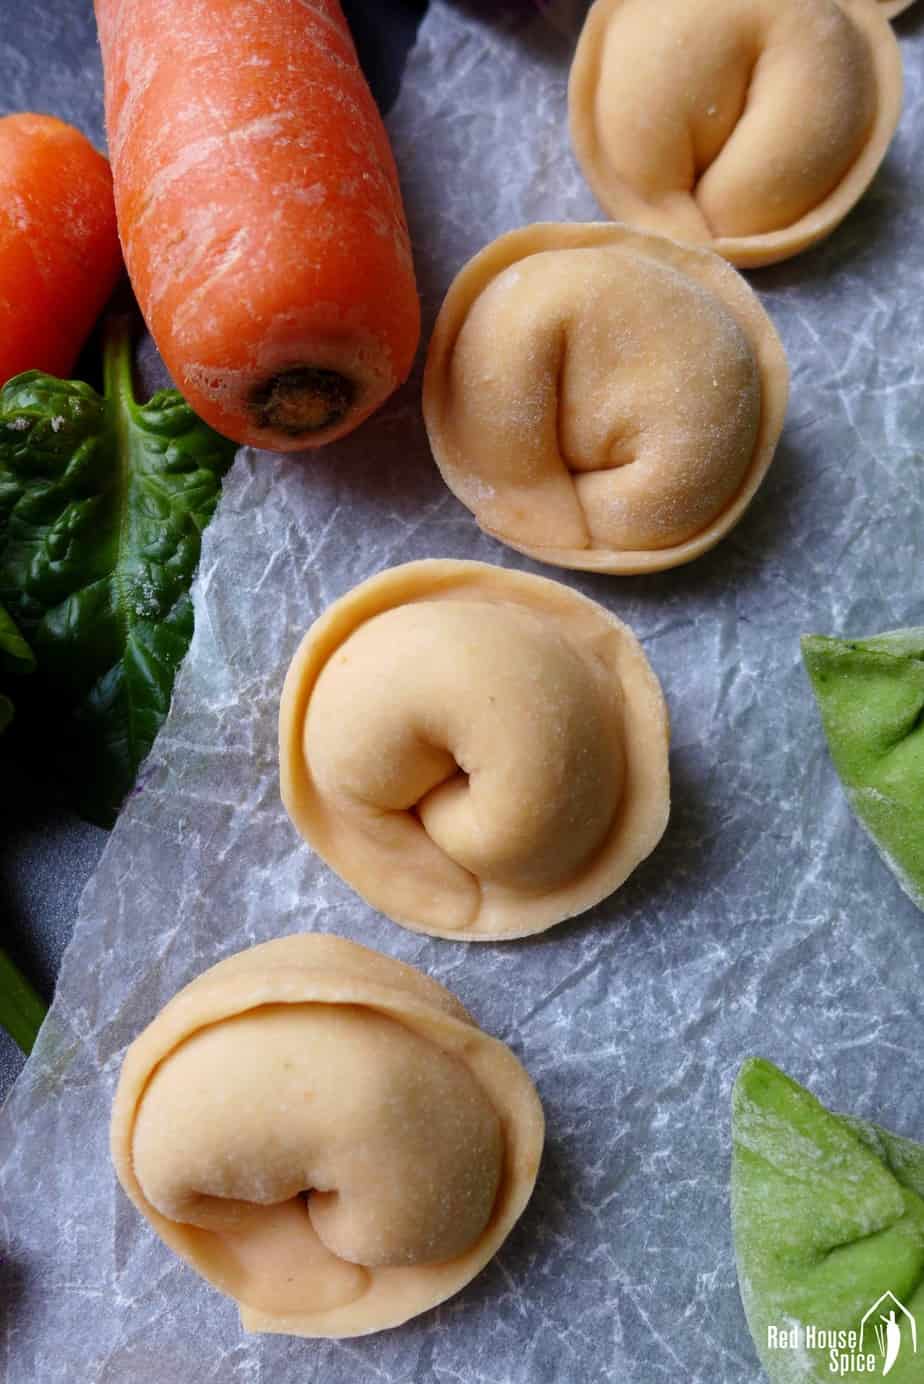 Chinese dumplings made in orange colour and ingot shape.